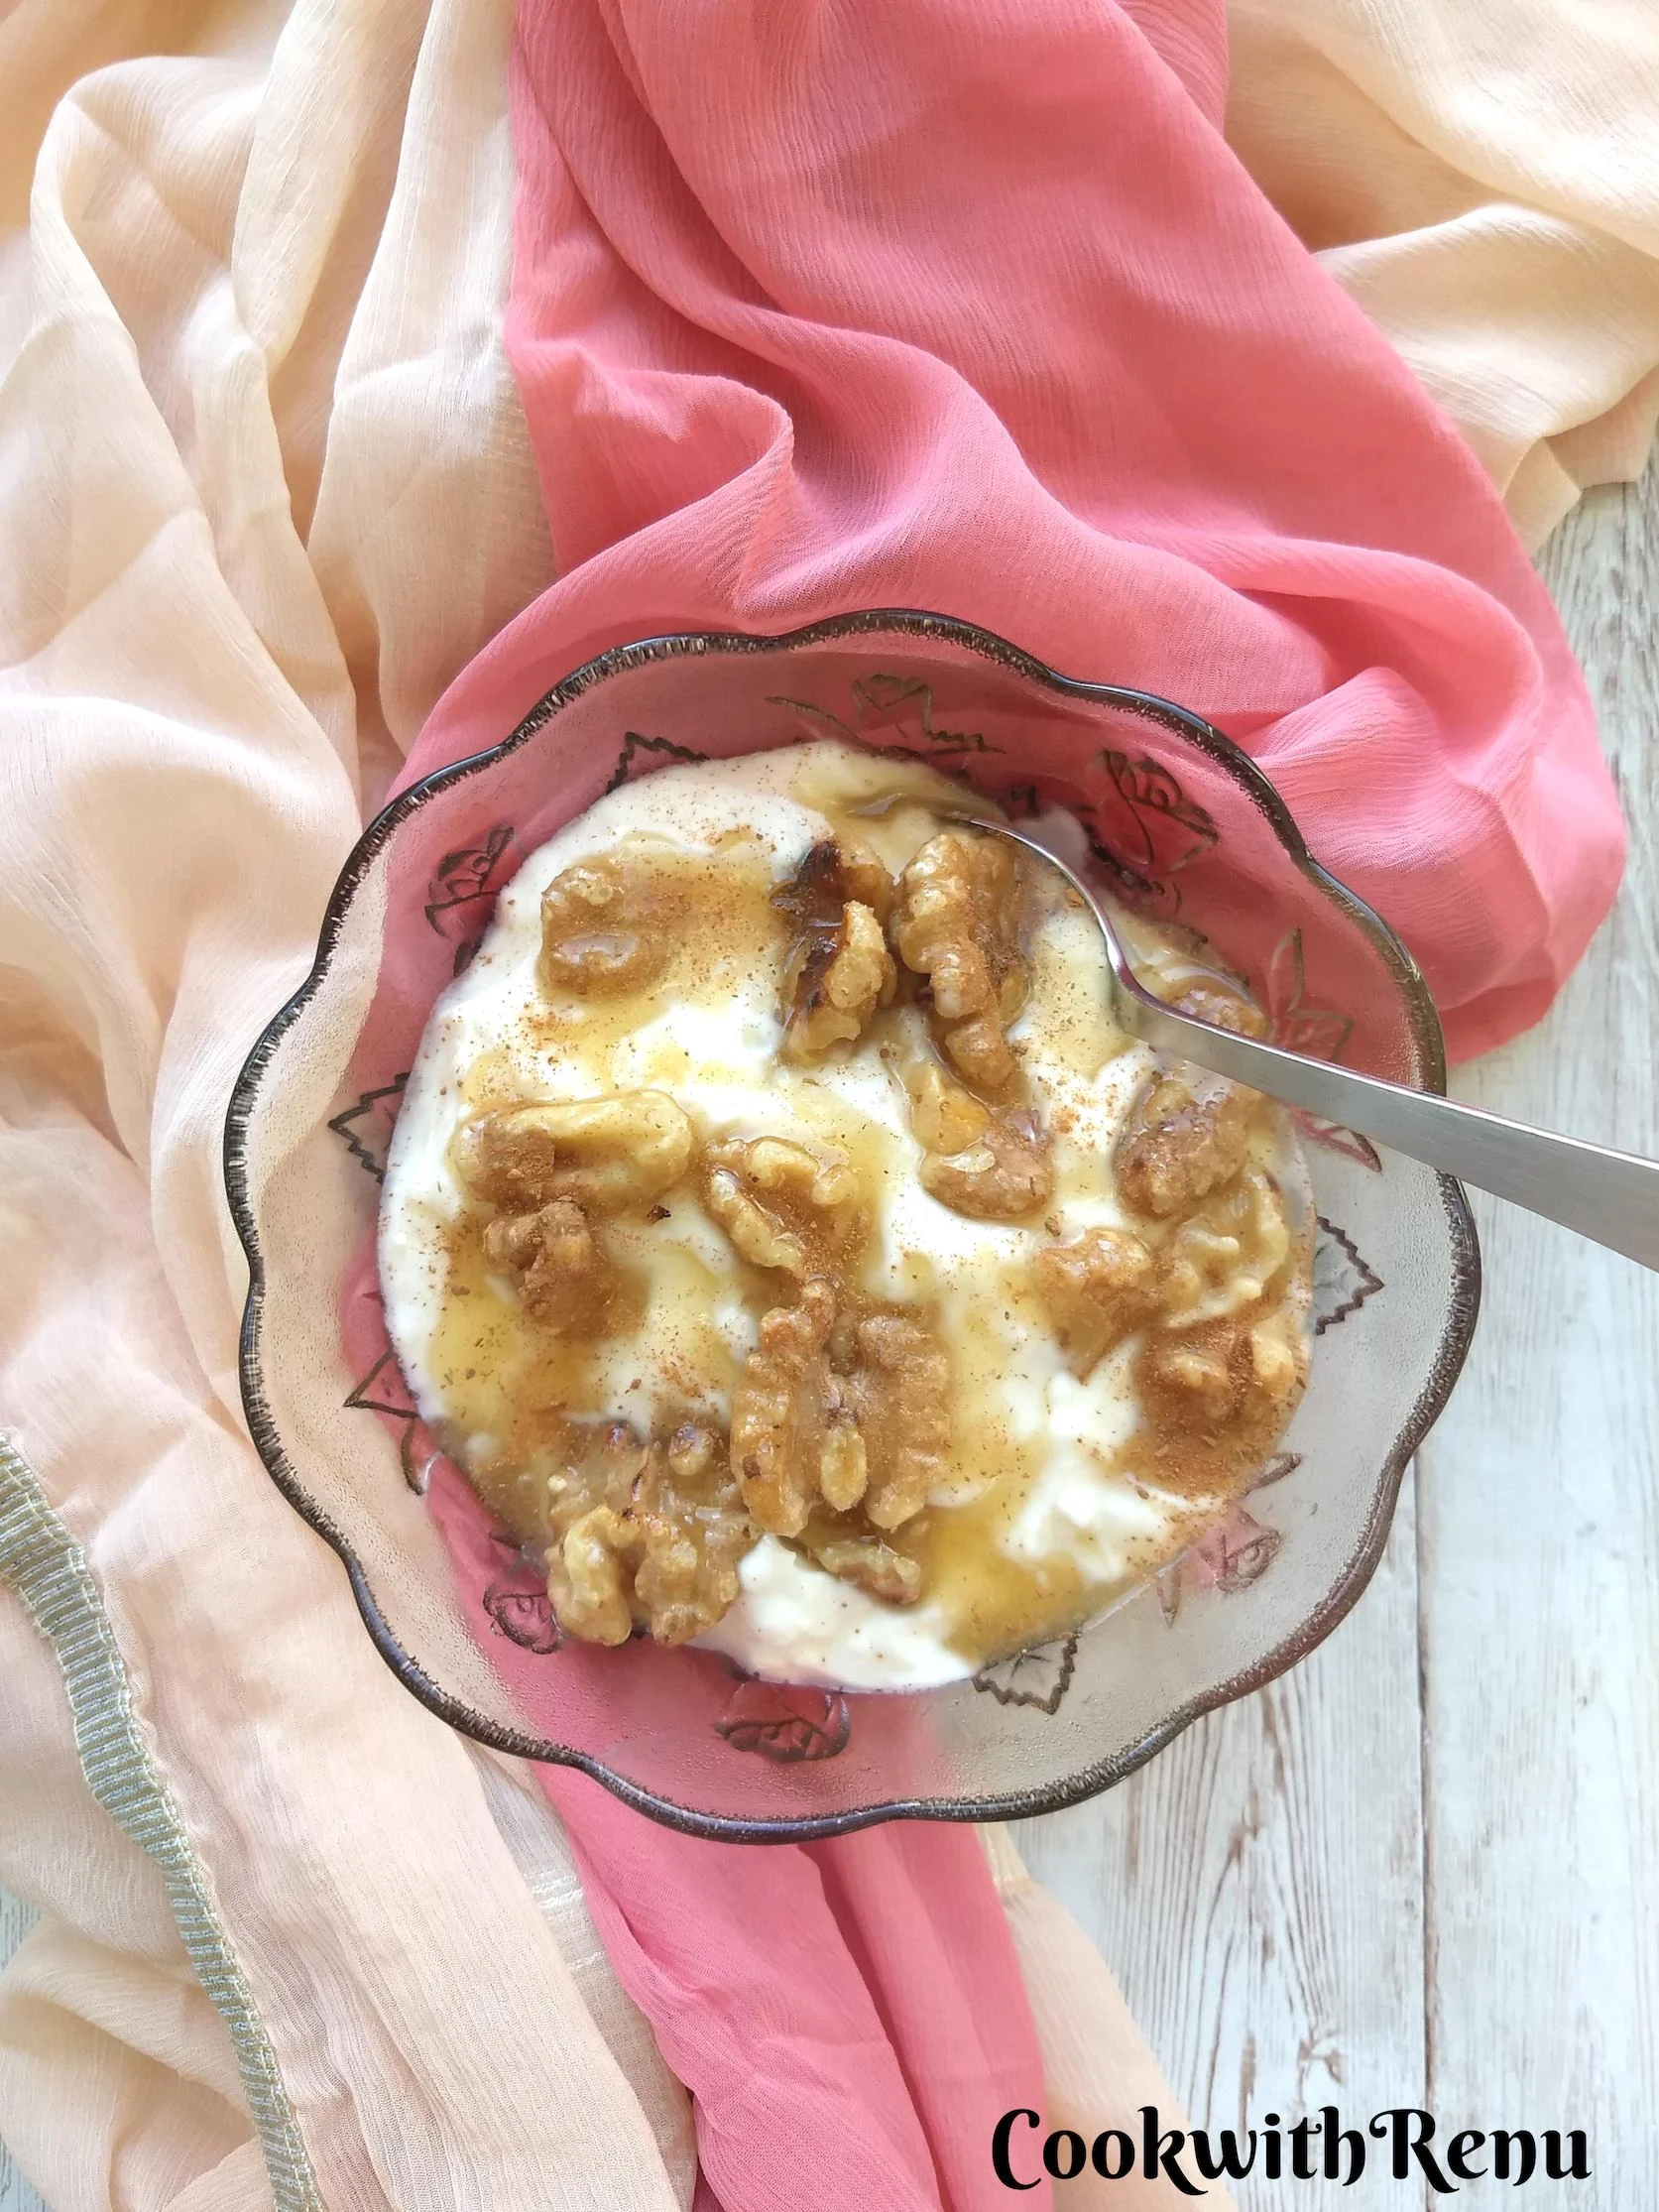 Greek Yogurt With Honey and Walnuts (Yiaourti me Meli)